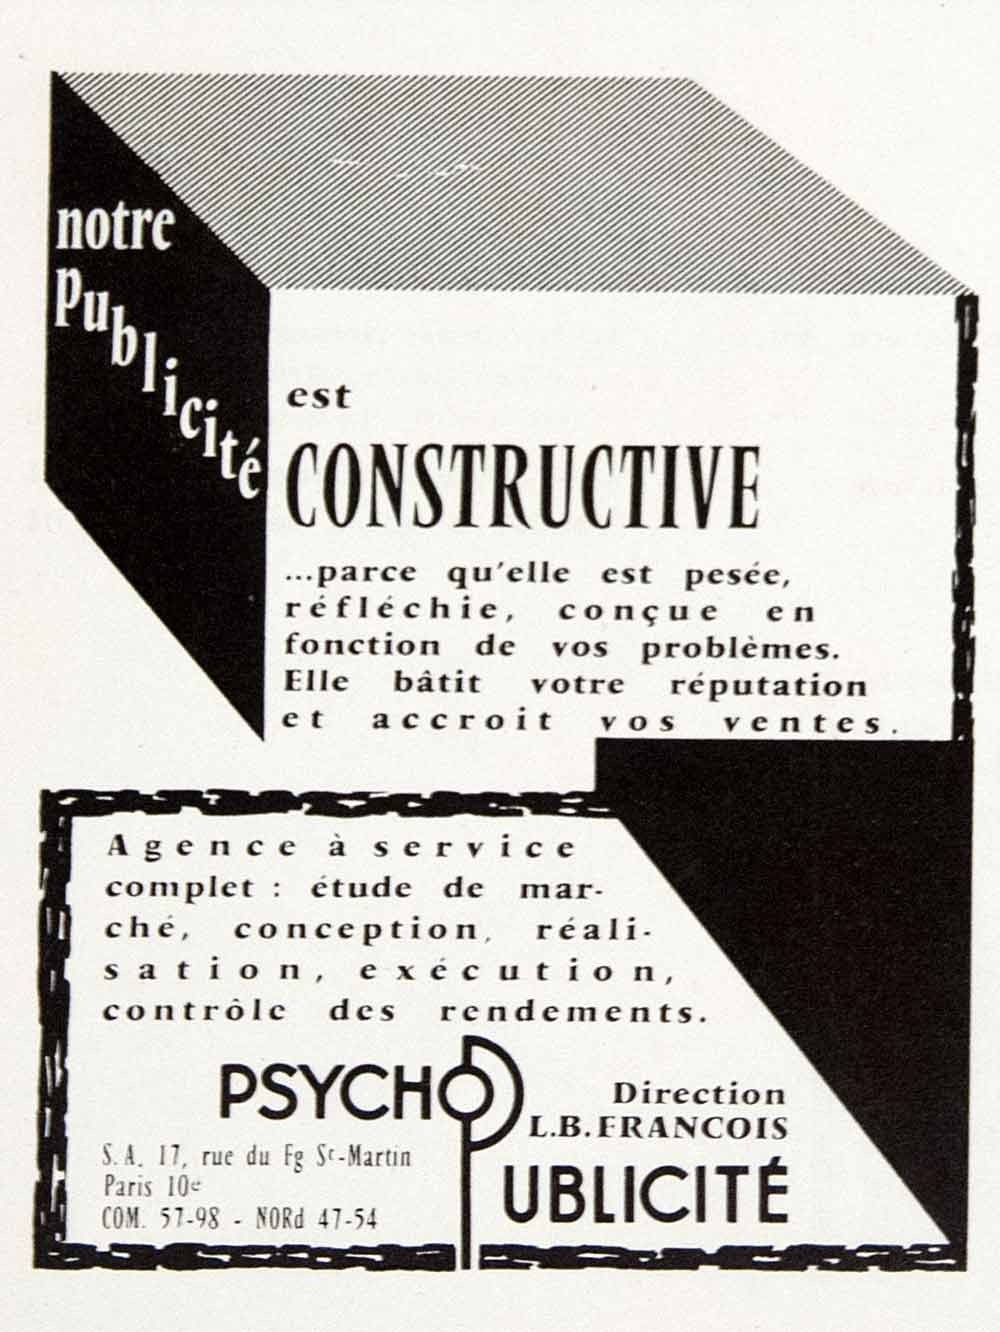 1957 Ad Psycho Publicite L B Francois Advertising Agency 17 Rue St-Martin VEN7